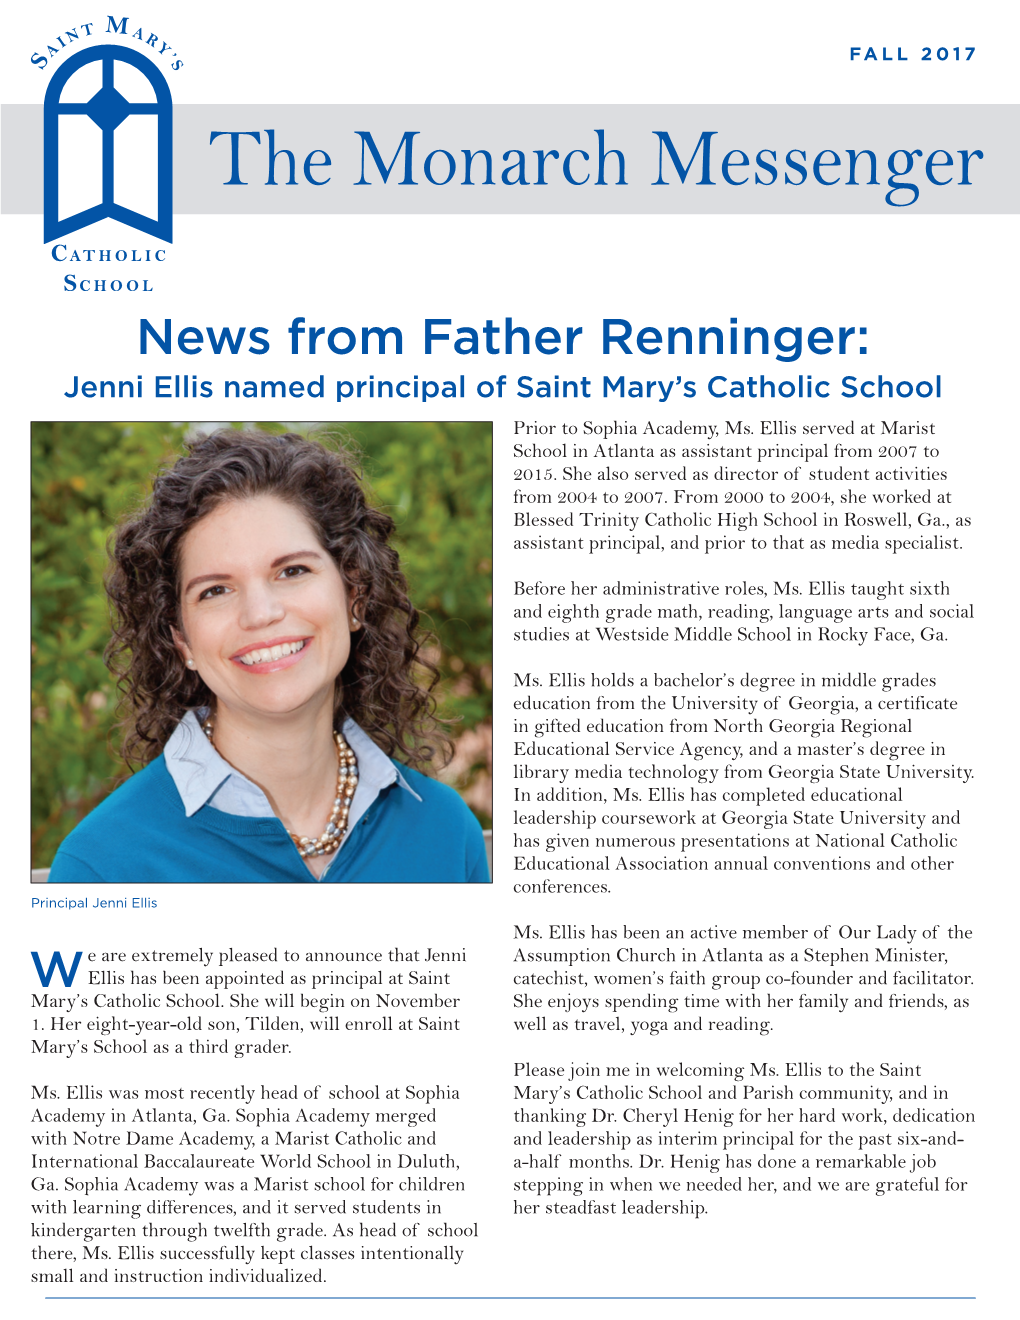 The Monarch Messenger